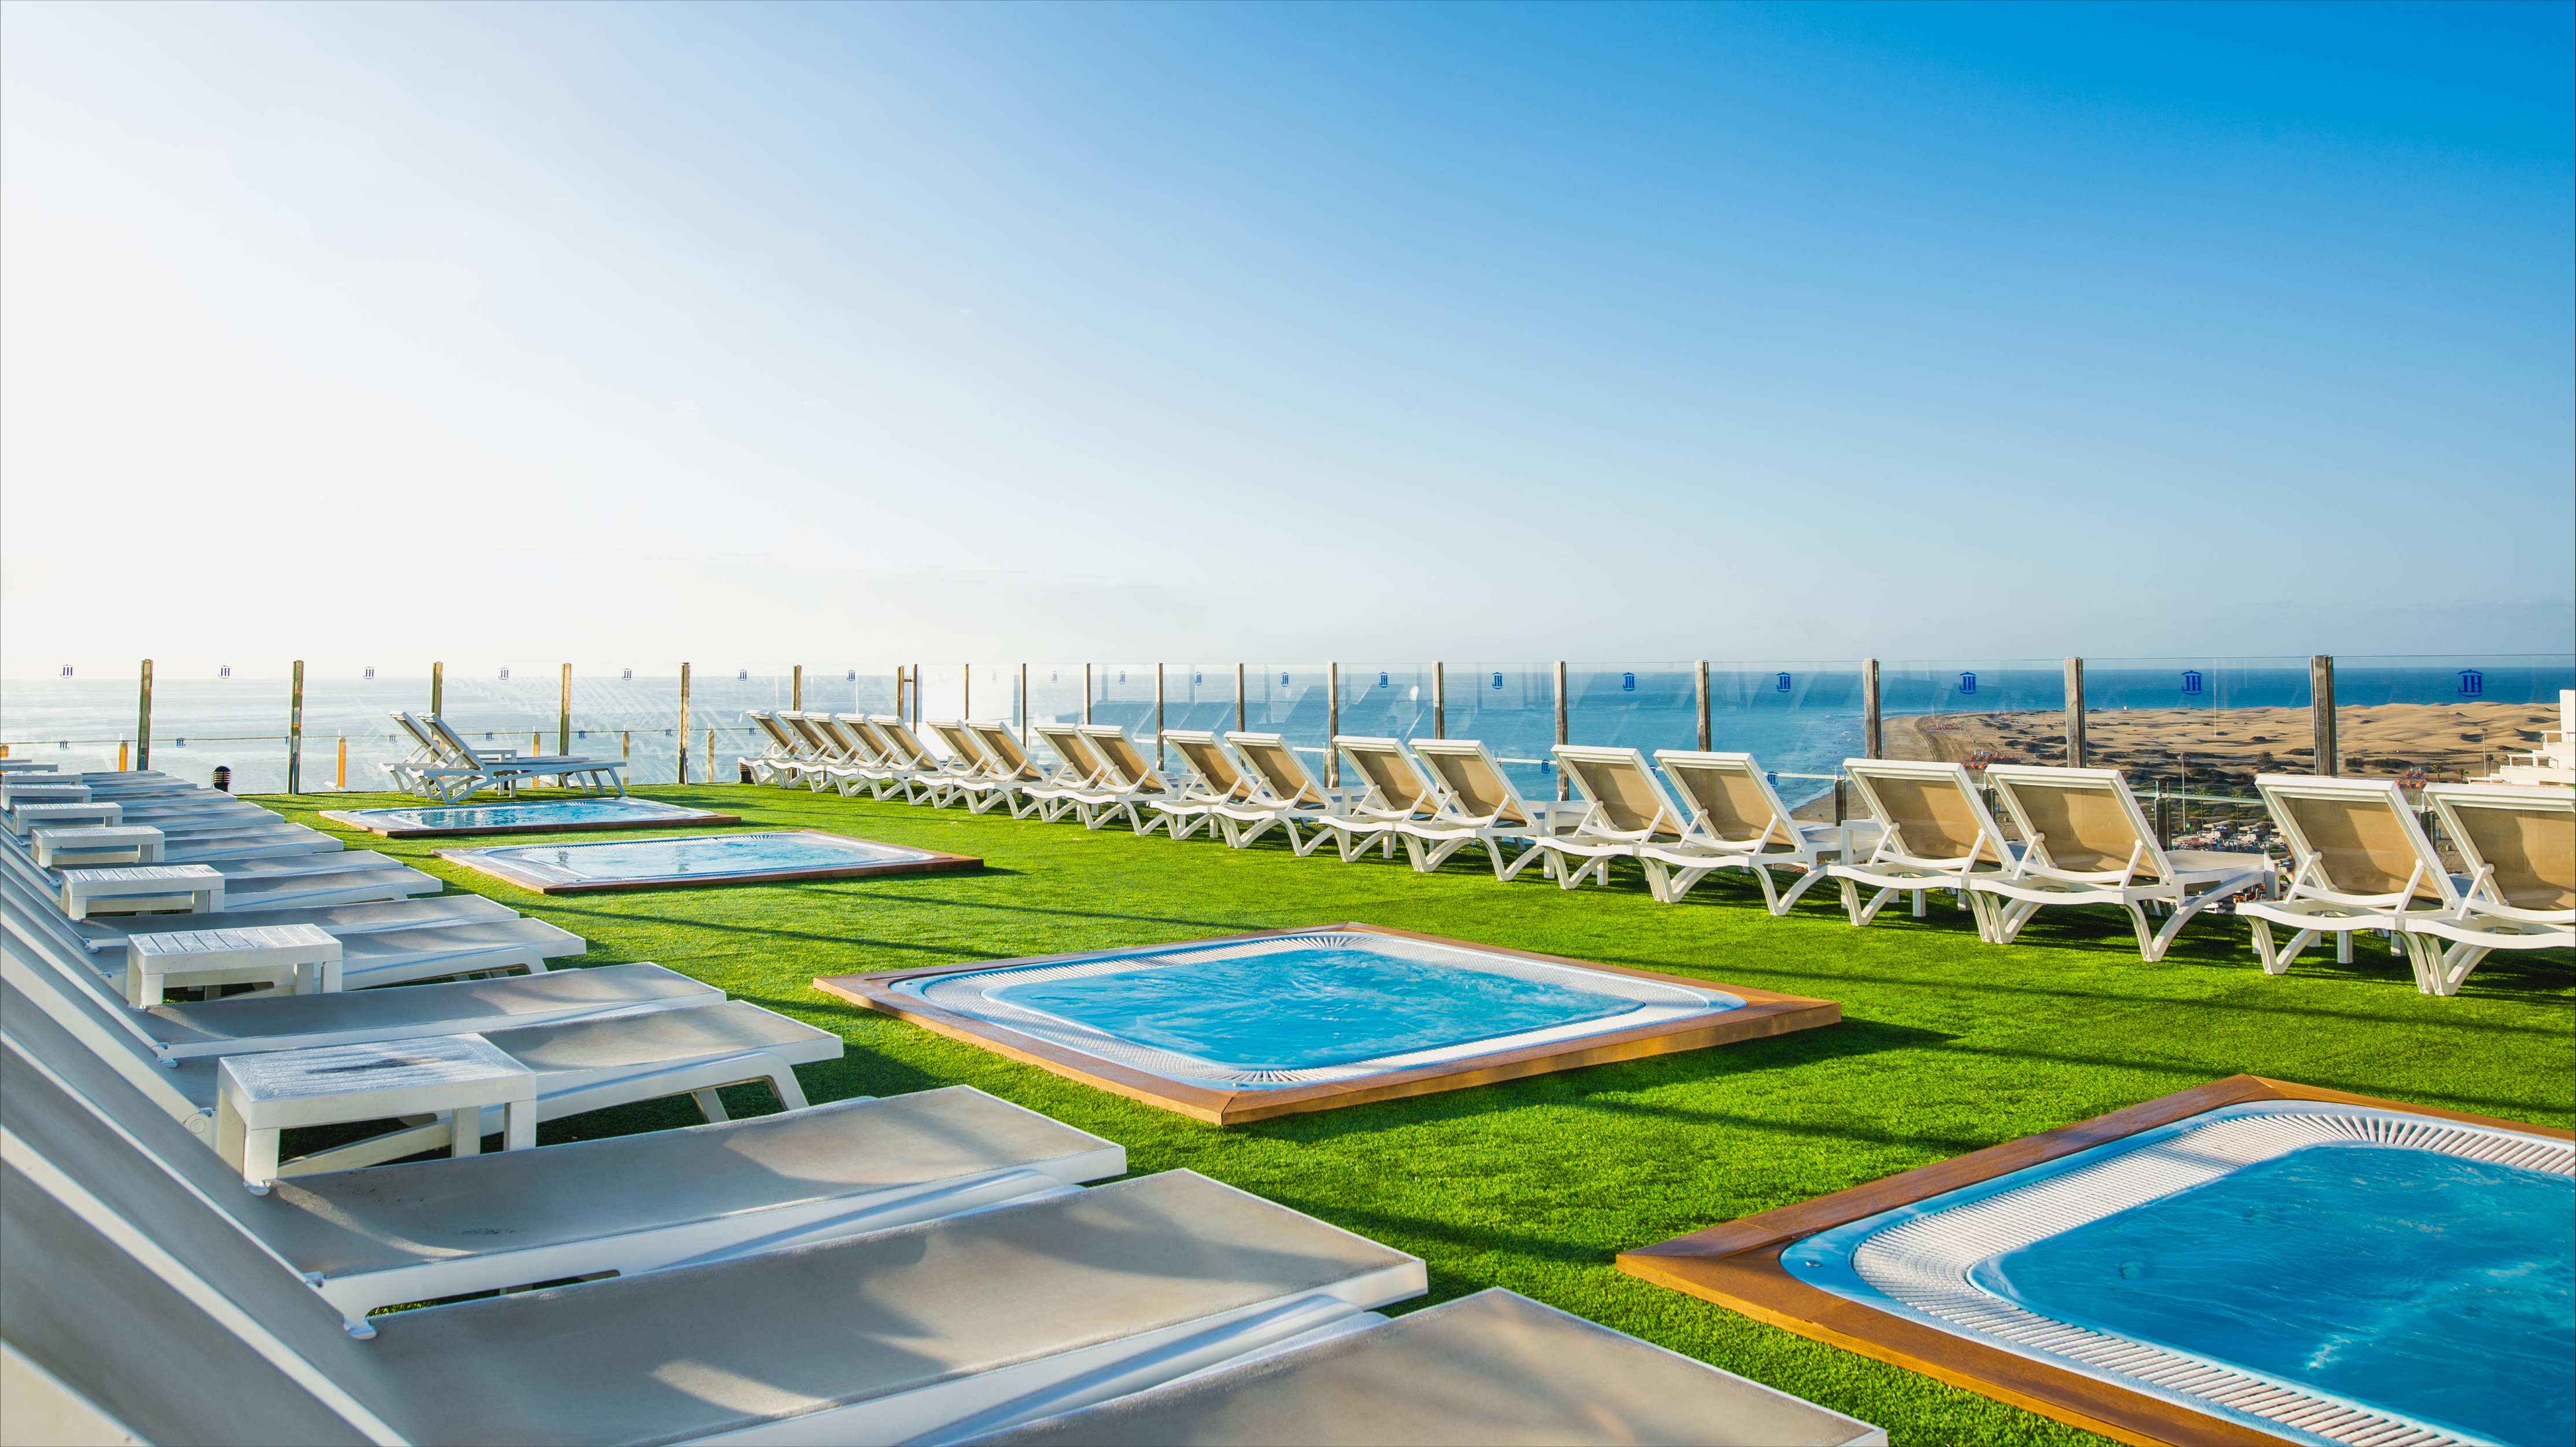 Hôtel HL Suitehotel Playa del Ingles**** - Gran Canaria - 